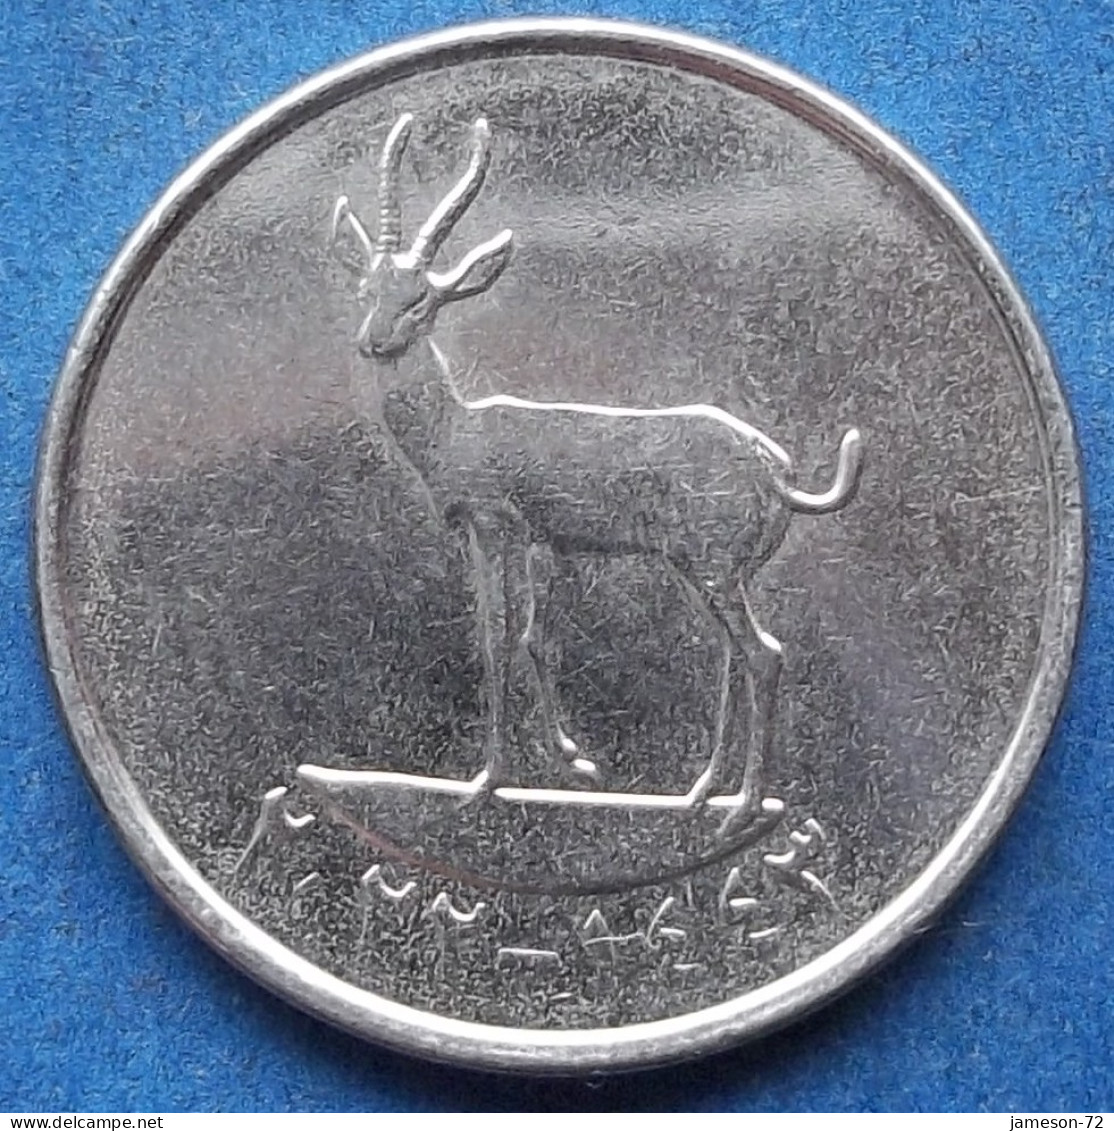 UNITED ARAB EMIRATES - 25 Fils AH1443 / 2022AD "Gazelle" KM# 4a Independent (1971) - Edelweiss Coins - Emiratos Arabes